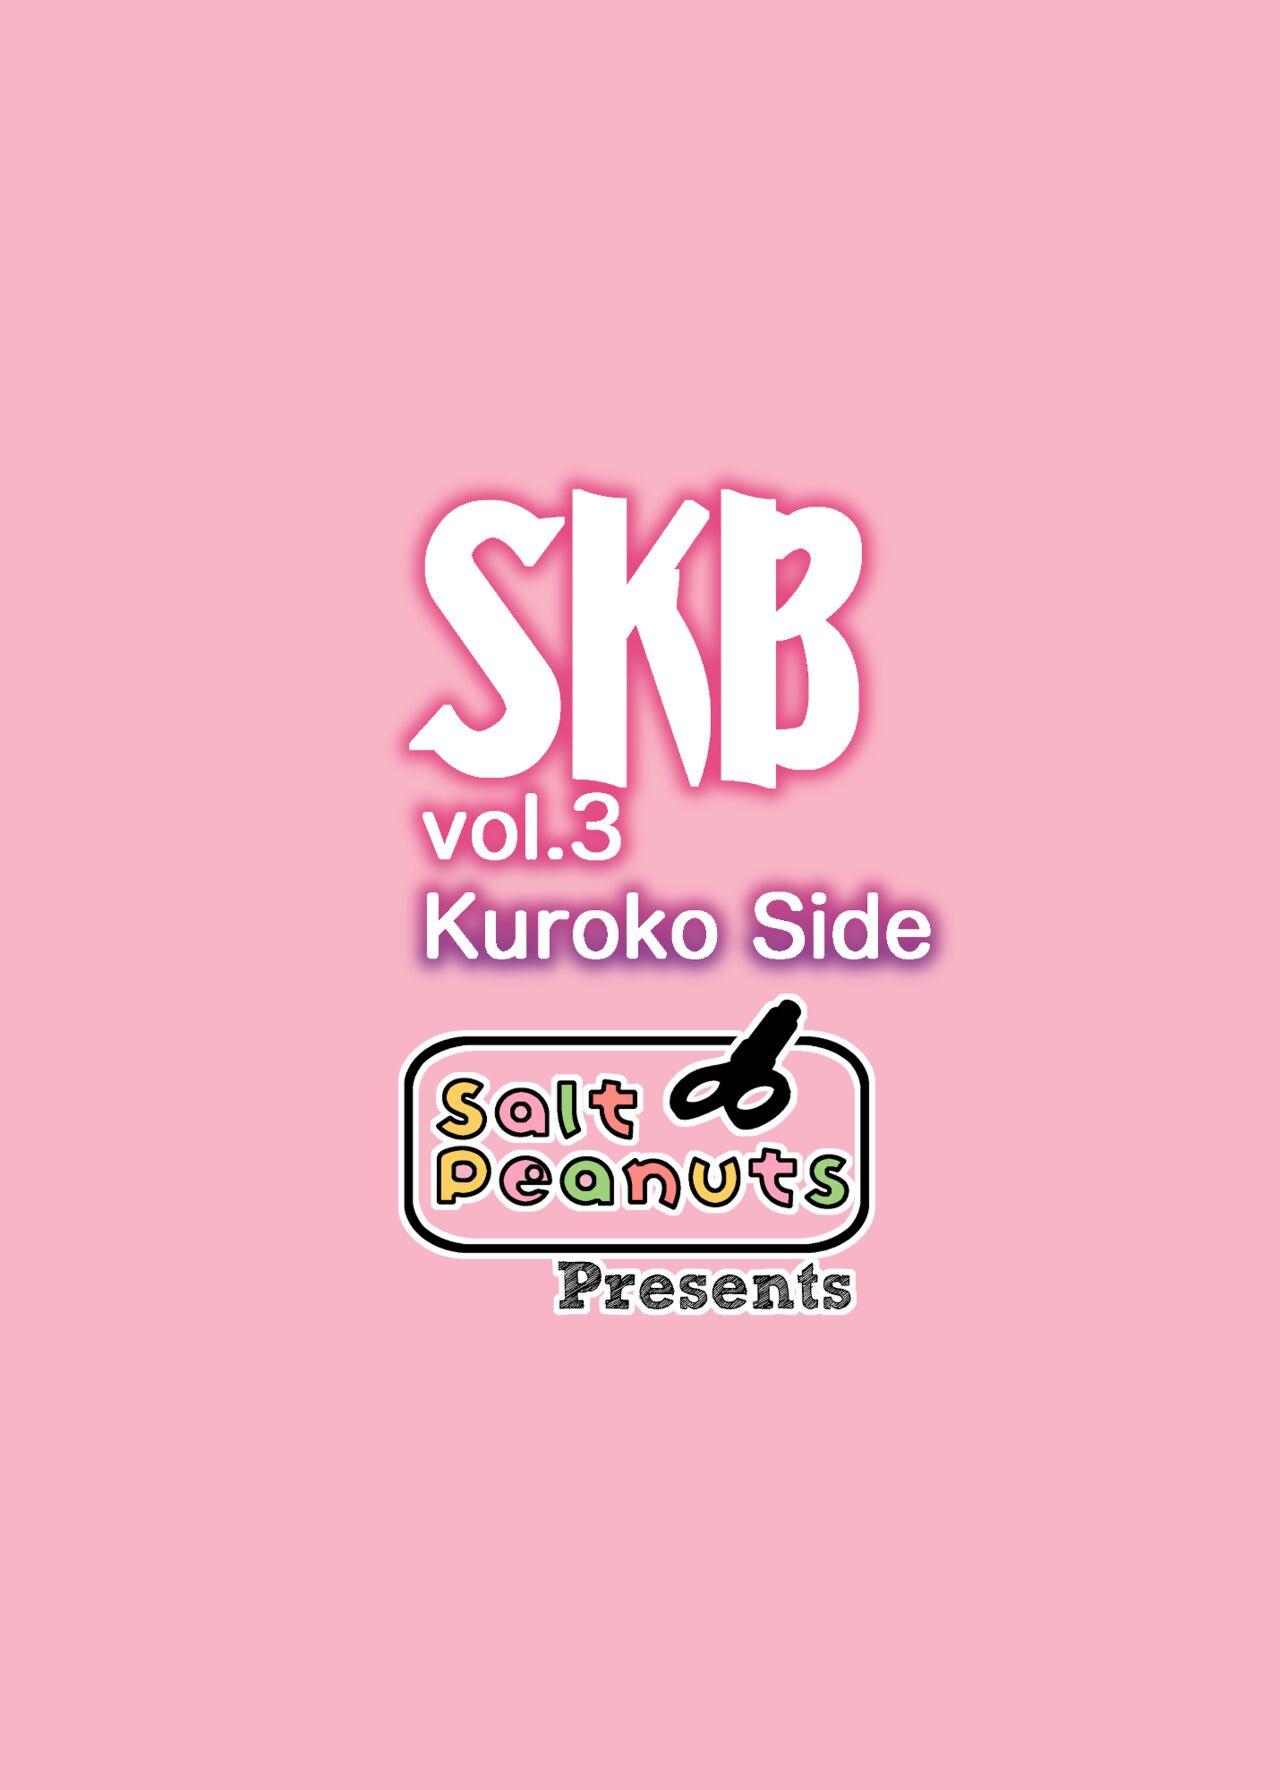 Skeb vol.3 Kuroko Side 27